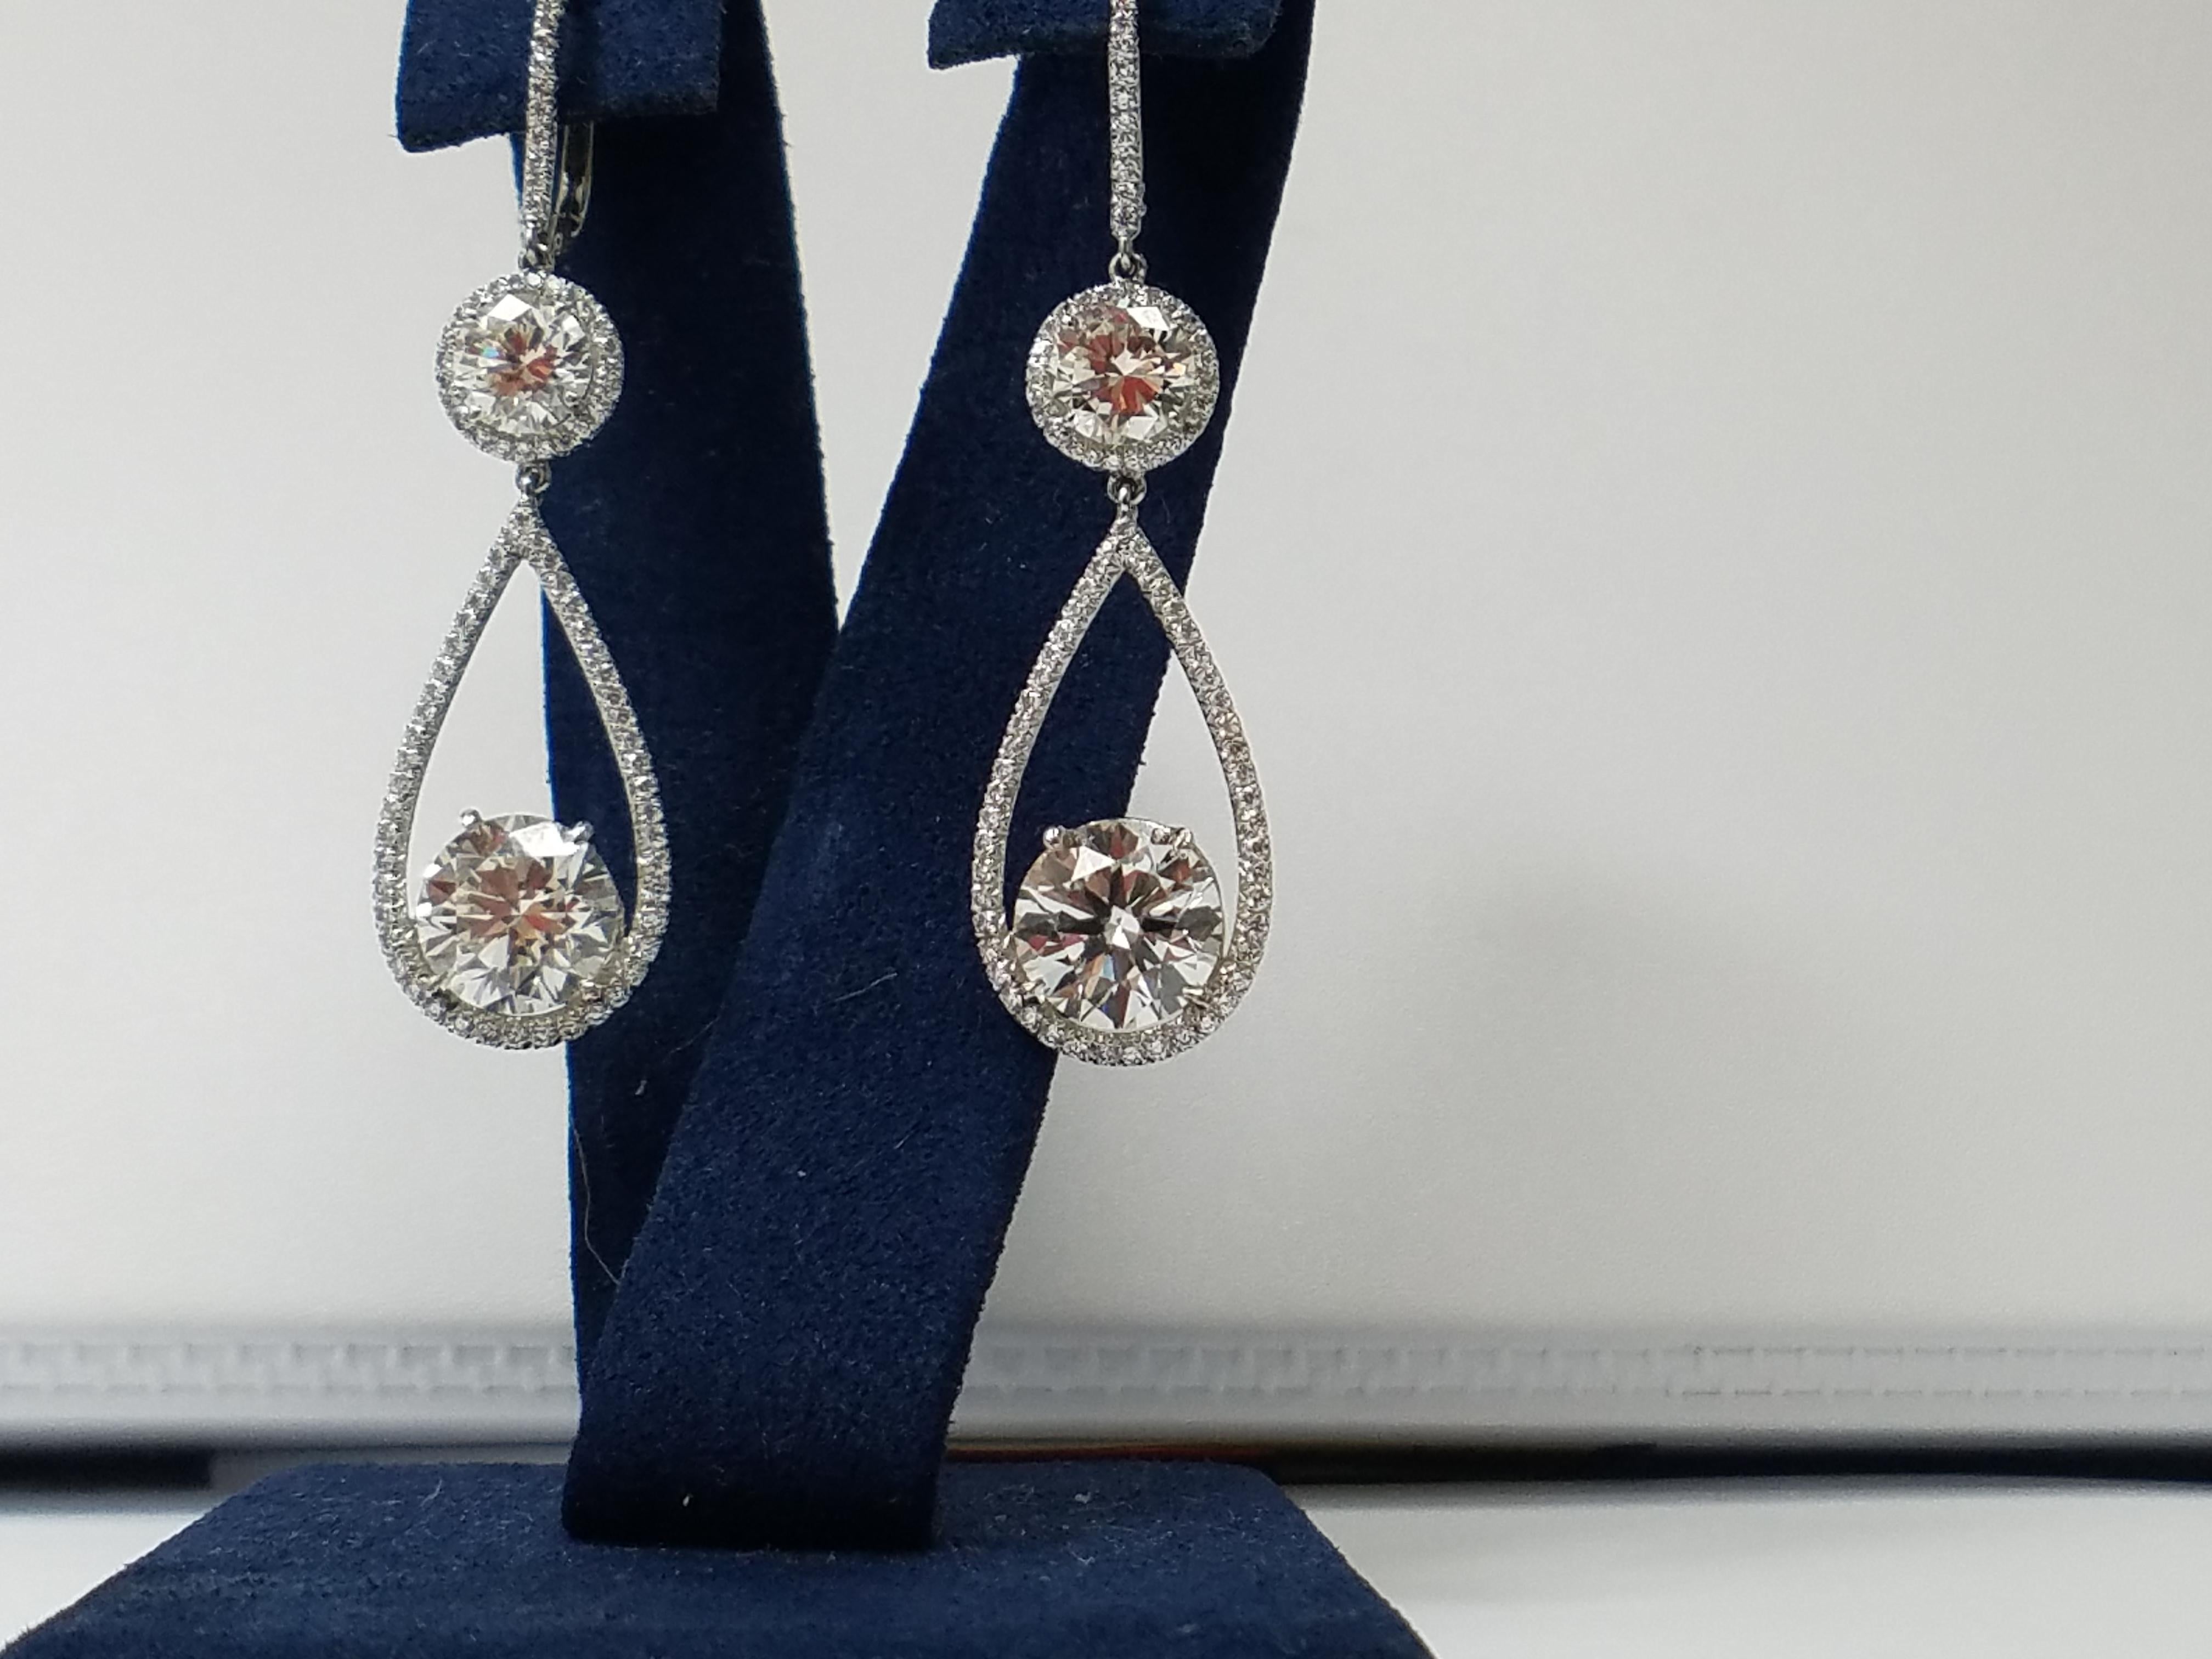 Round Cut GIA Certified 9.19 Total Carat Weight Diamond Earrings